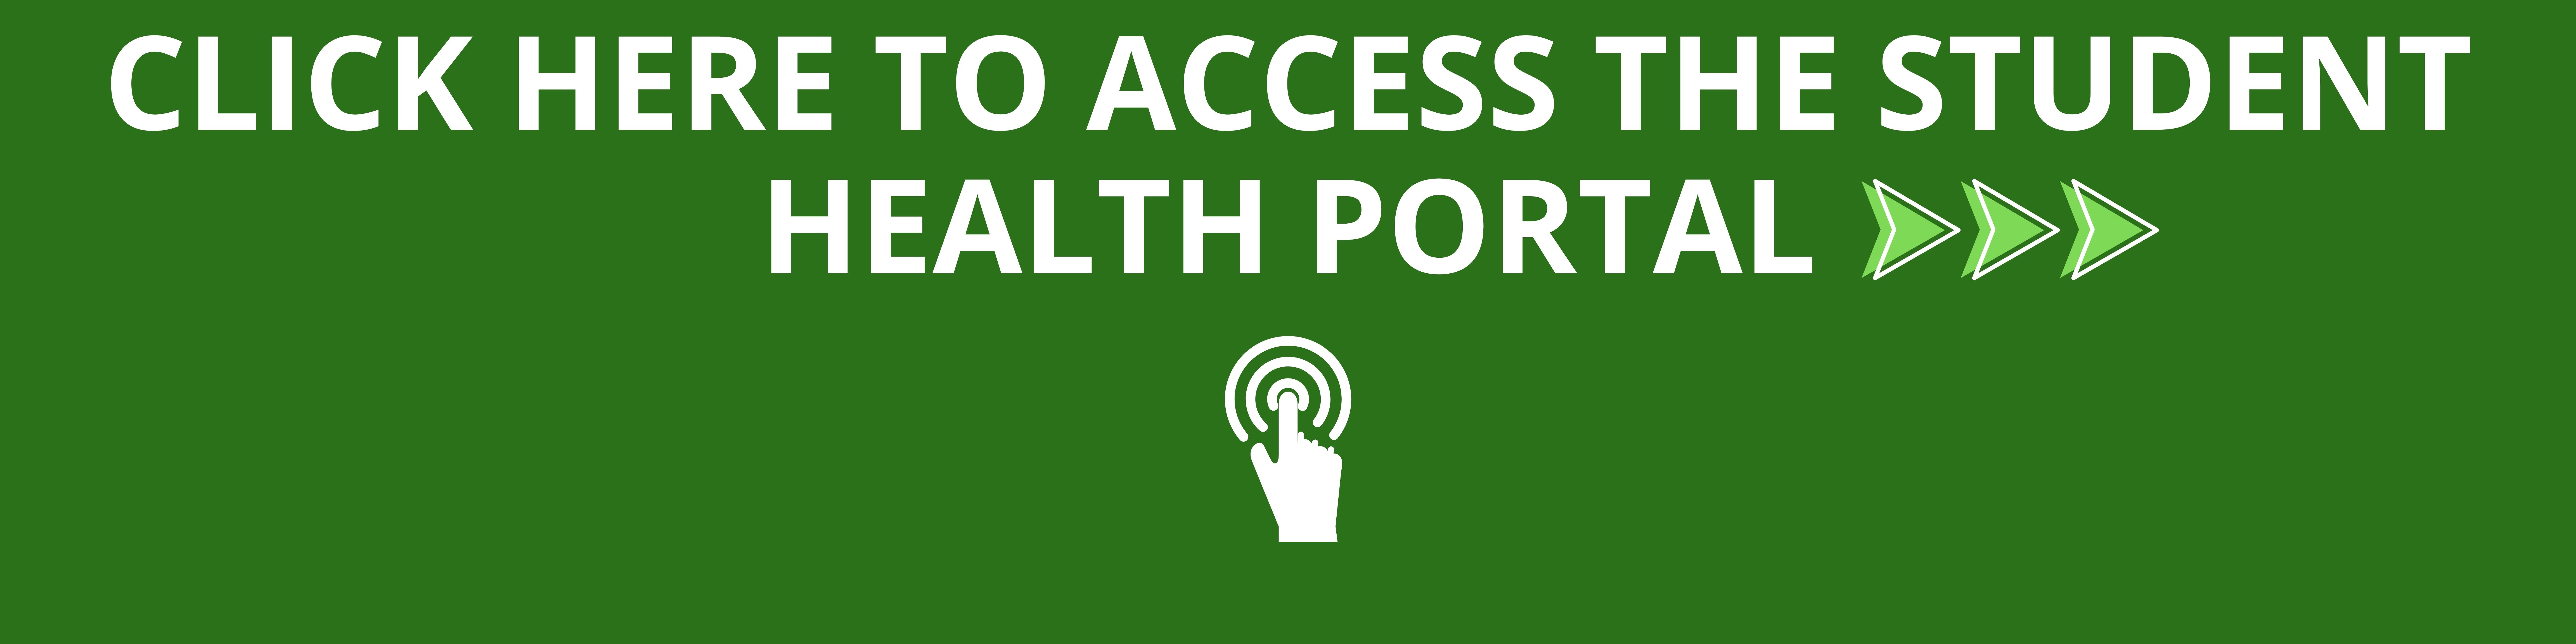 health portal access